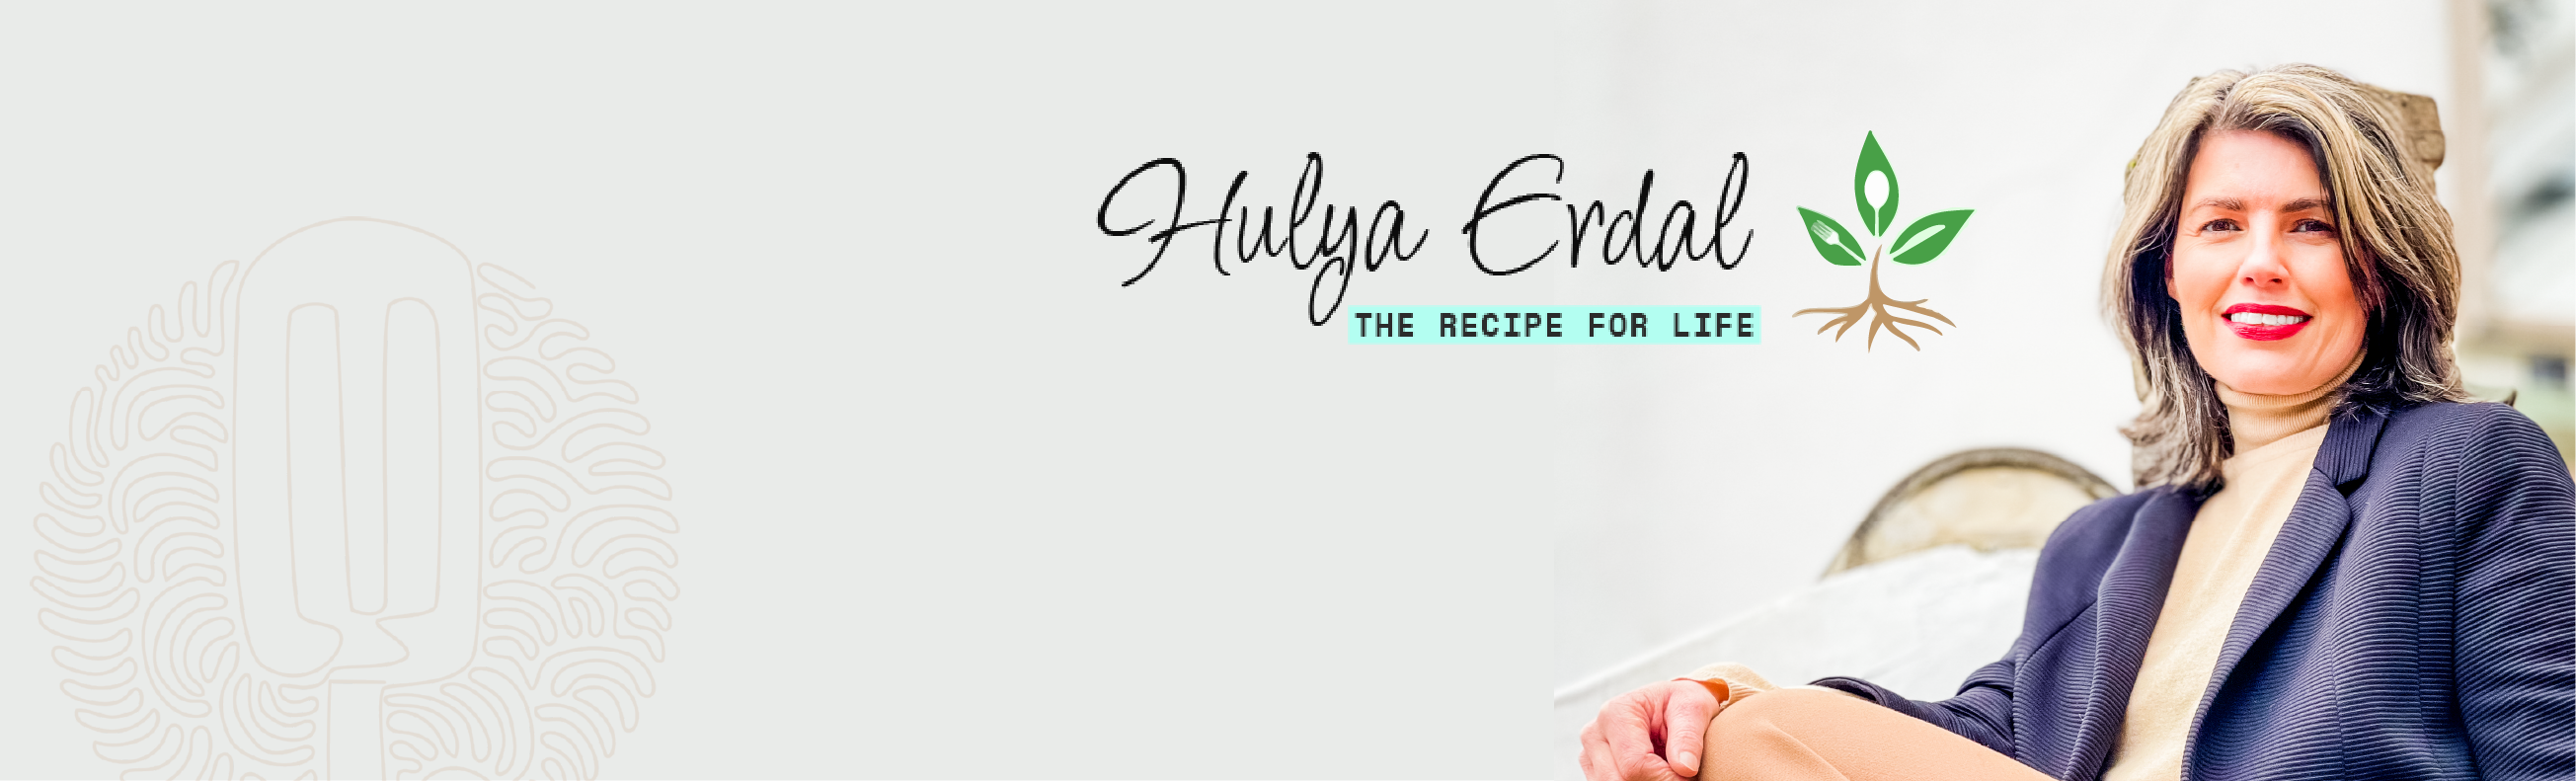 Hulya Erdal: The Recipe for Life